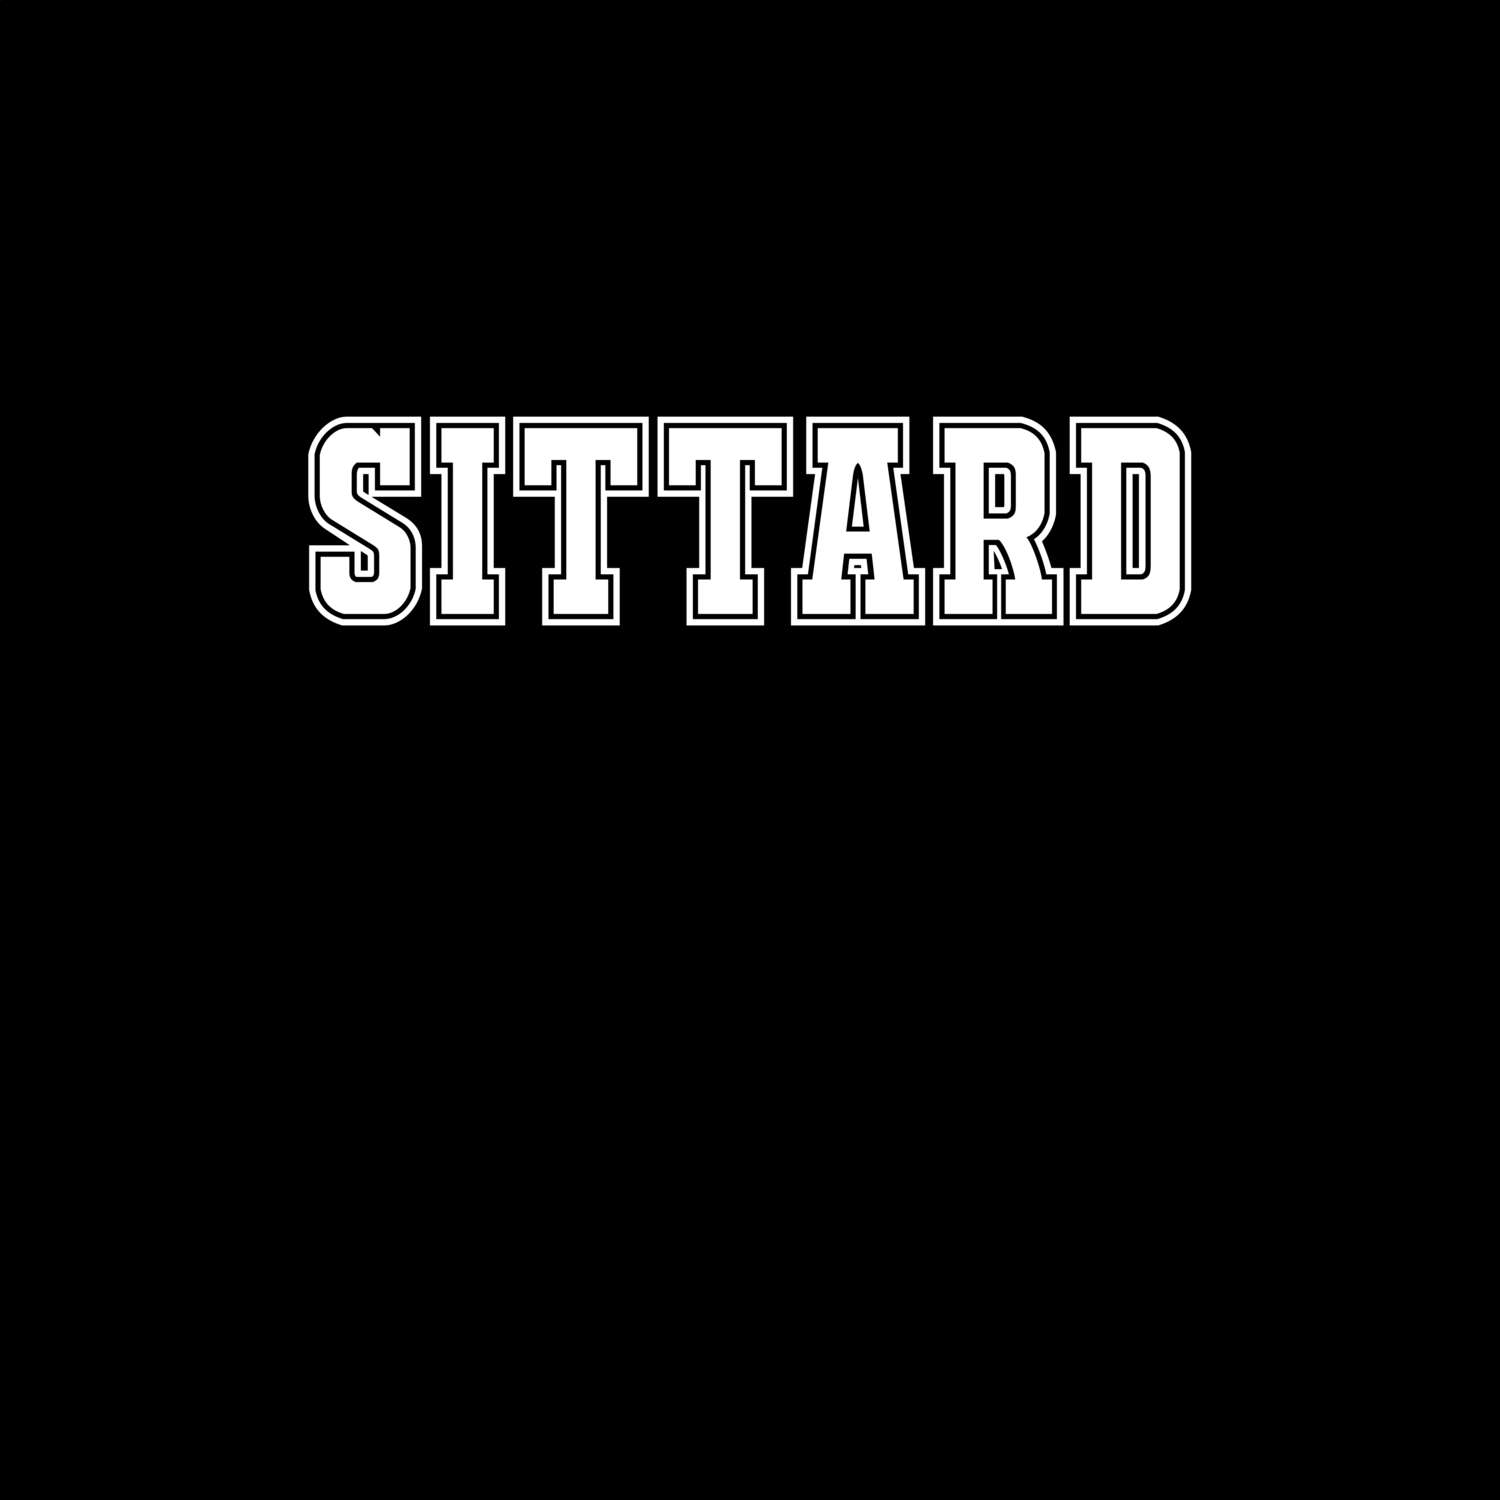 Sittard T-Shirt »Classic«